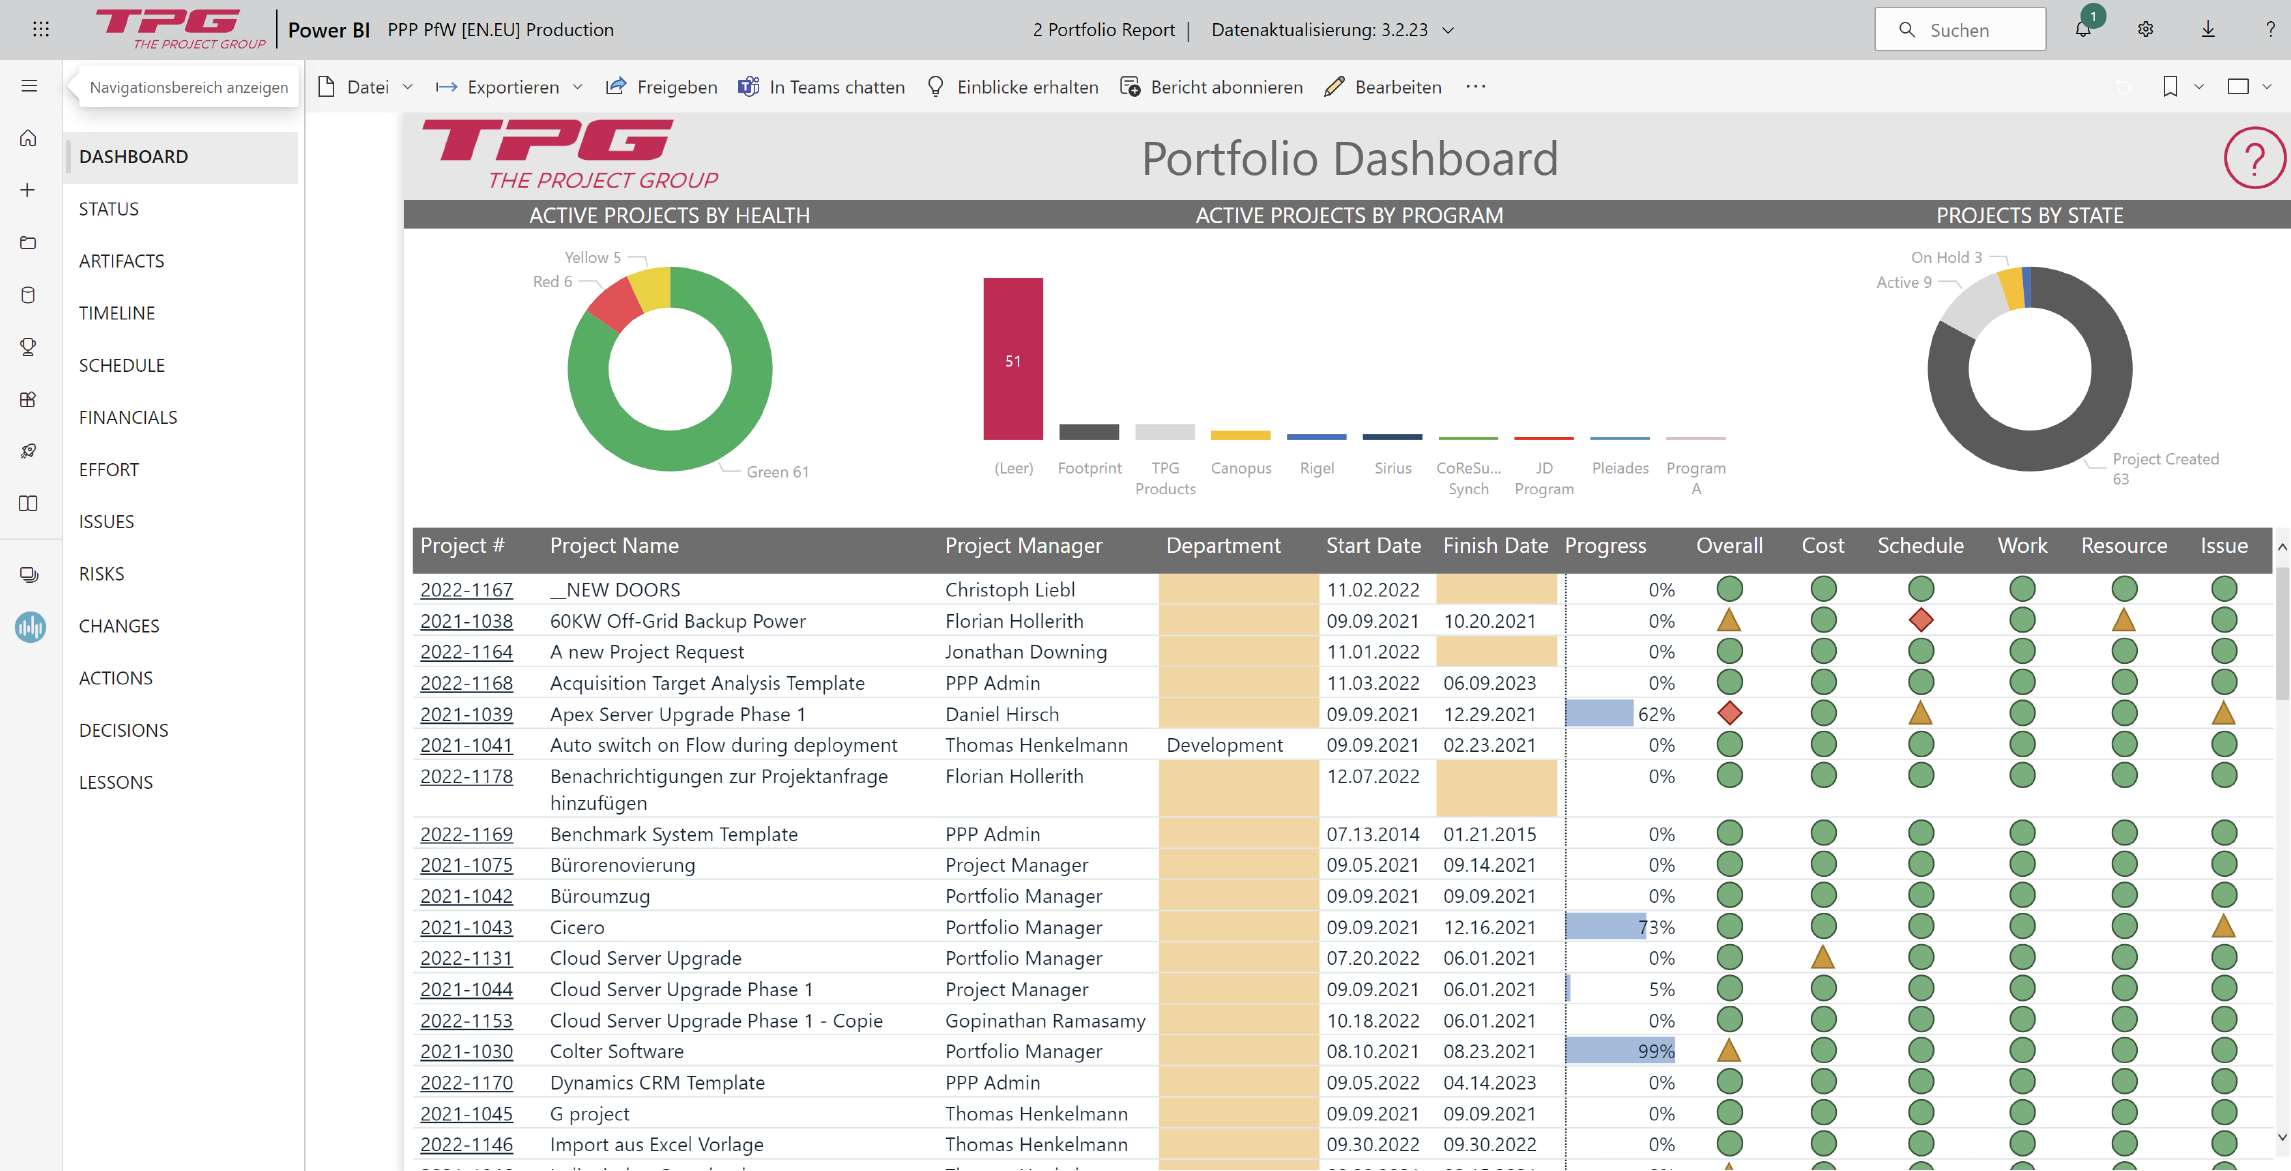 Microsoft Office 365 Project Management - Portfolio Dashboard